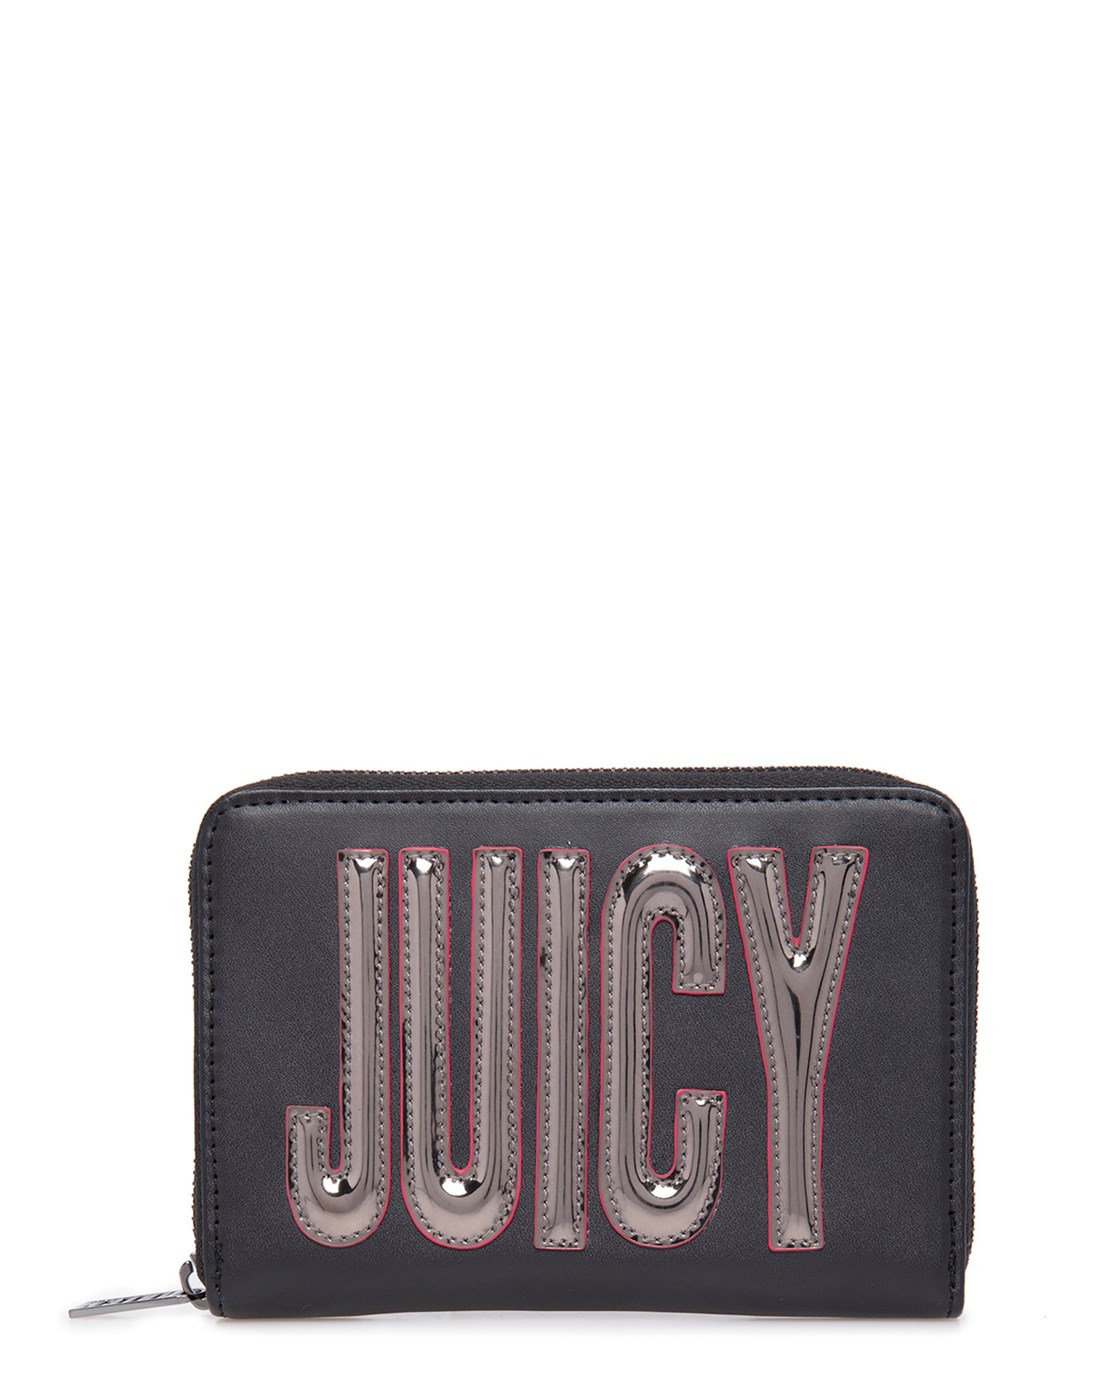 Juicy Couture JXJC Embossed Alexis Wallet